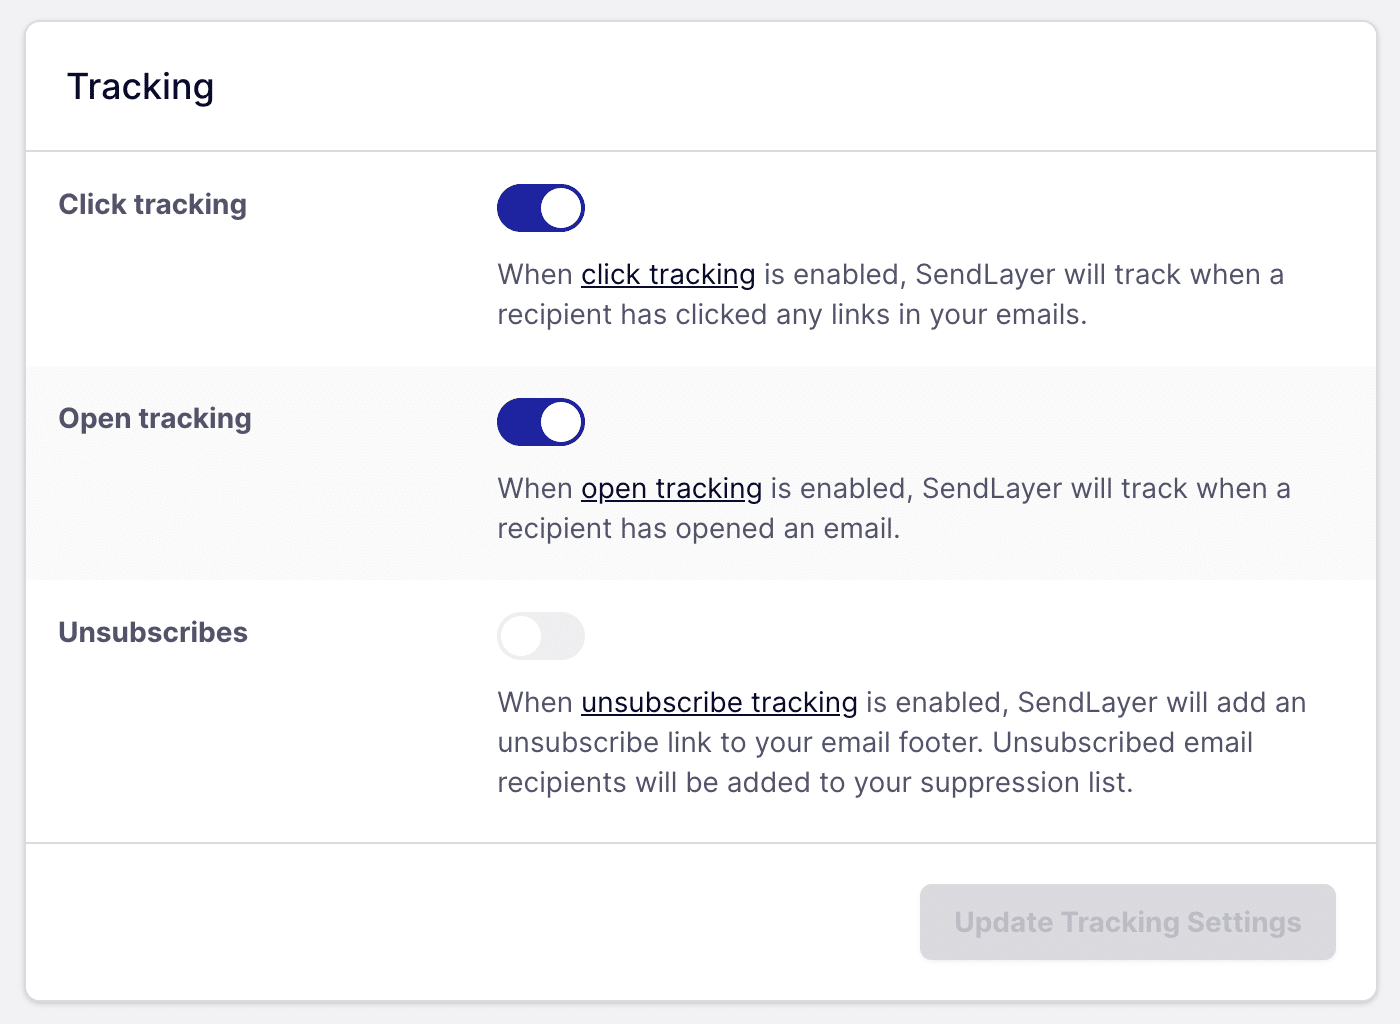 The tracking settings in SendLayer